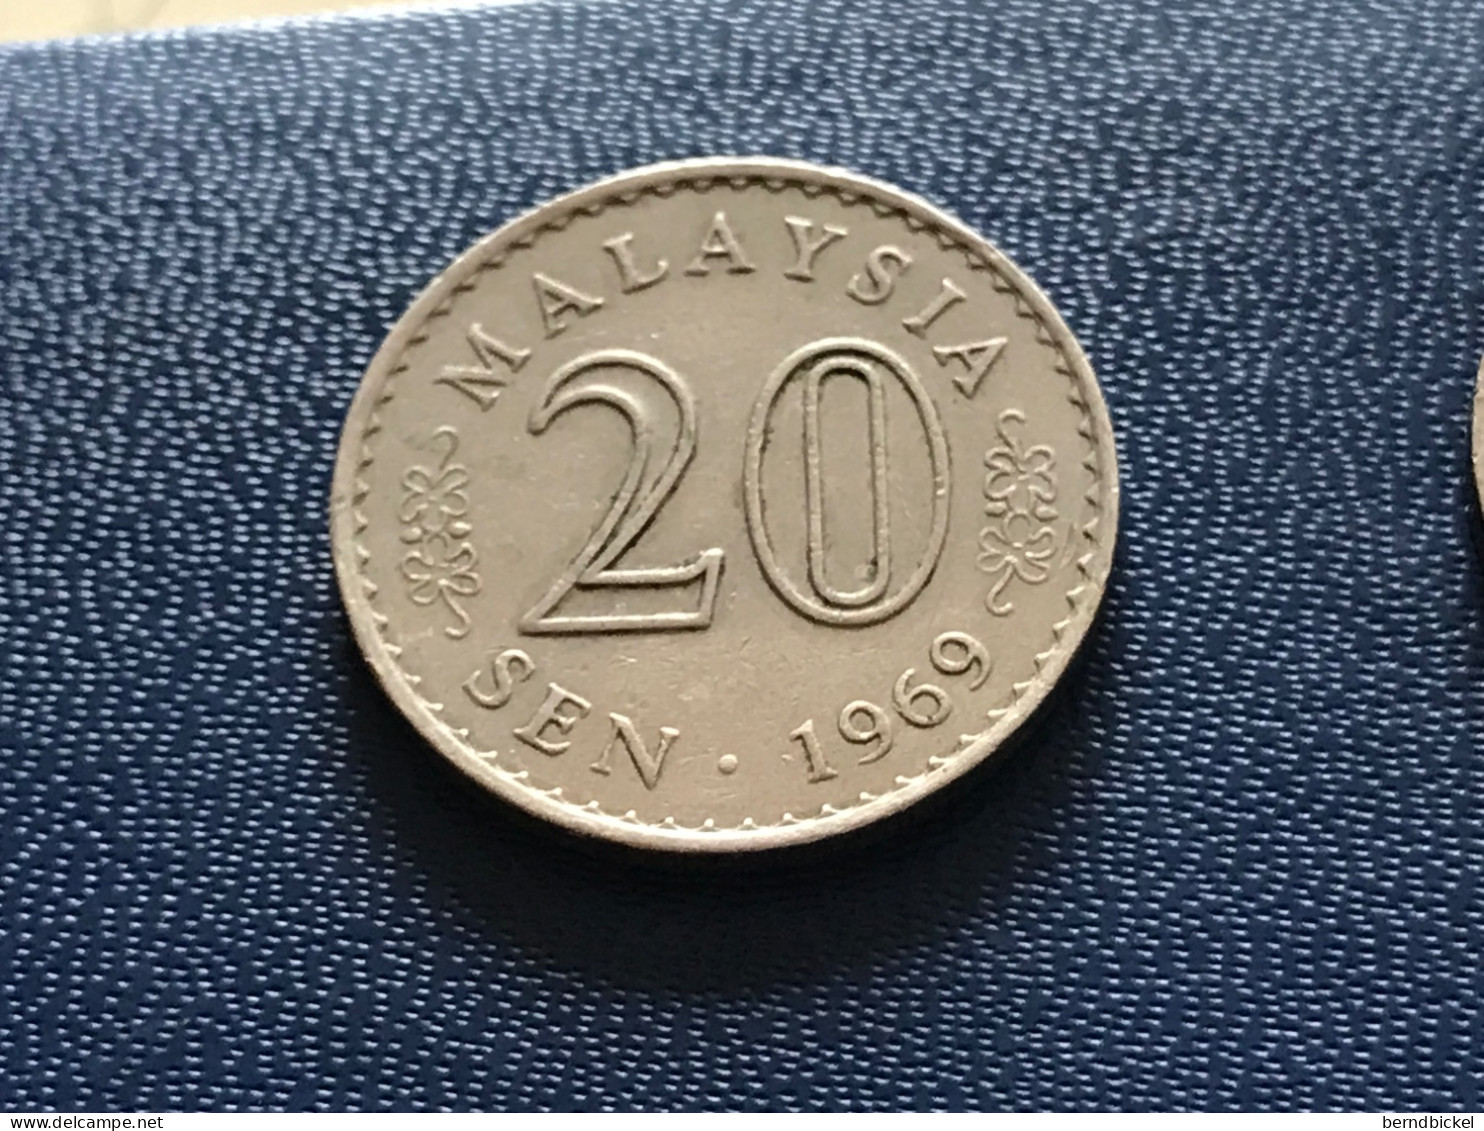 Münze Münzen Umlaufmünze Malaysia 20 Sen 1969 - Malesia